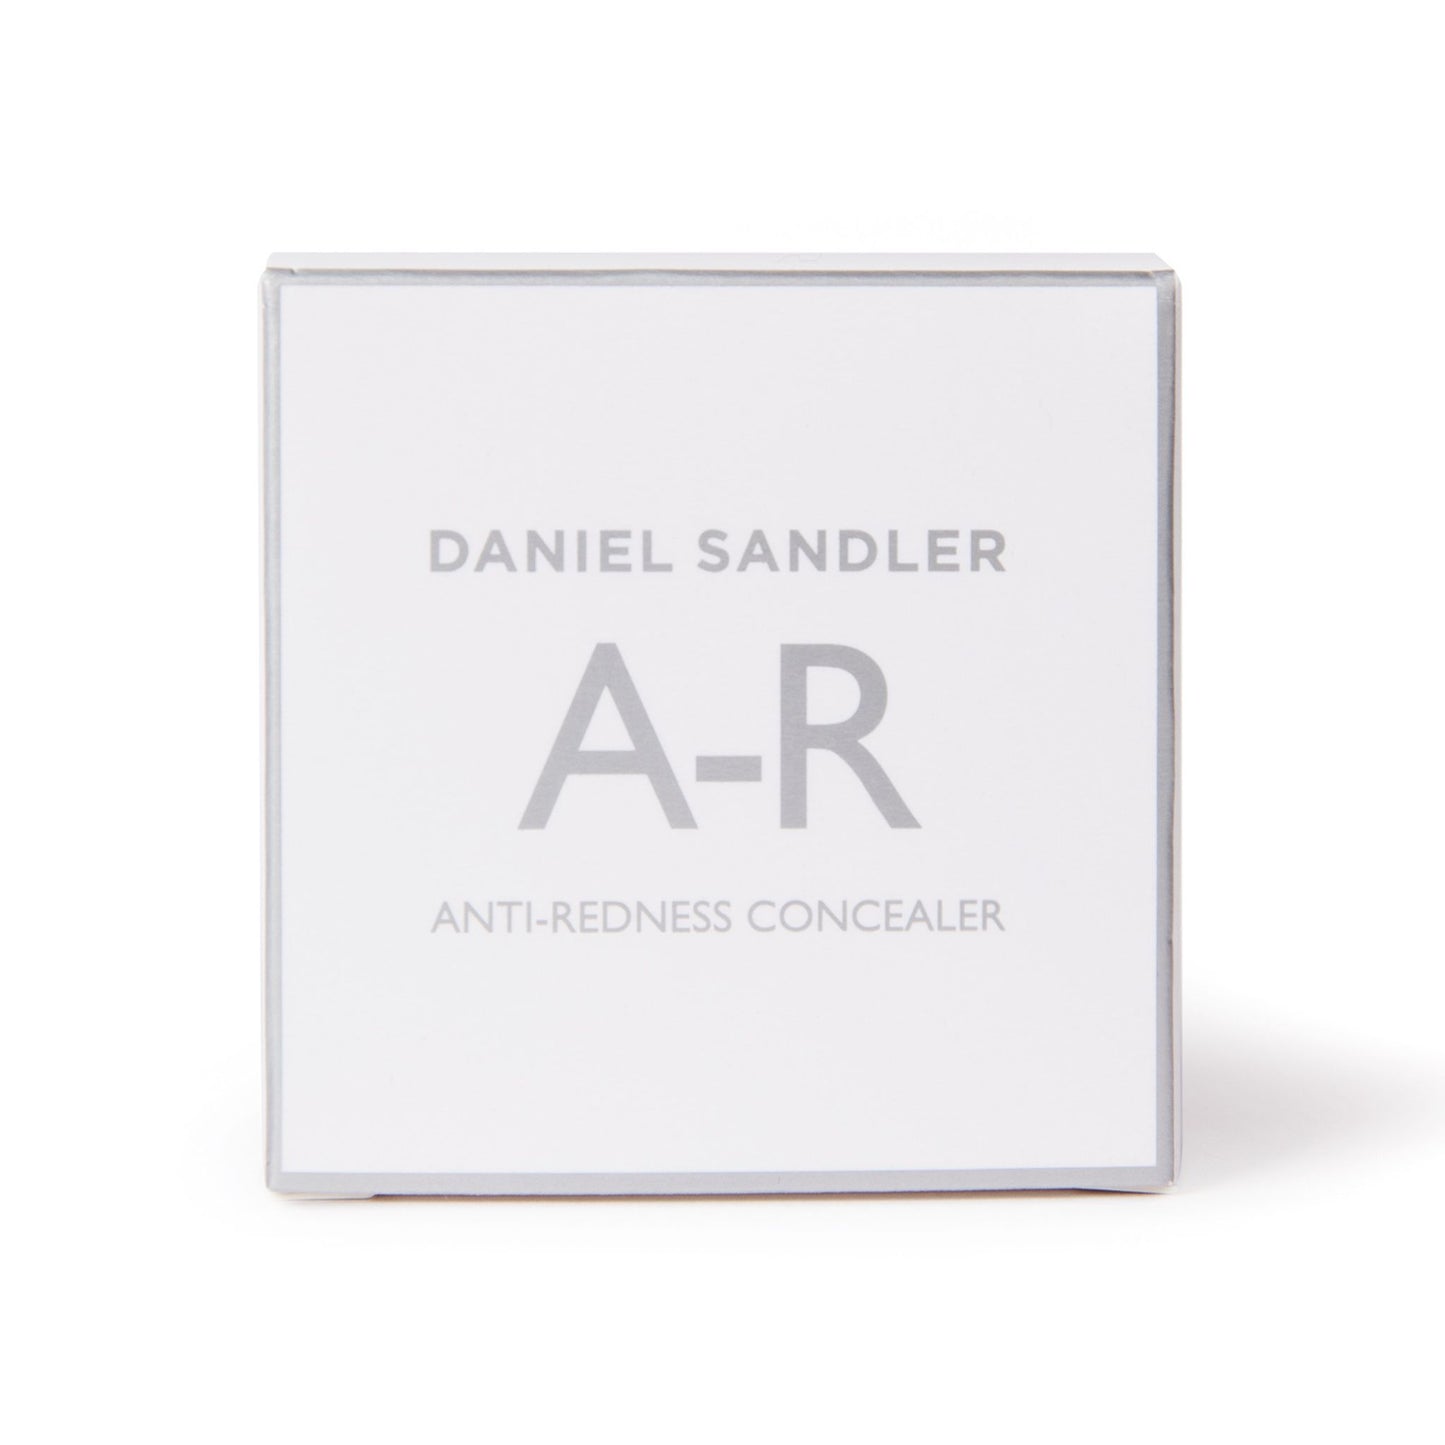 Daniel Sandler Anti-Redness Concealer Product Box